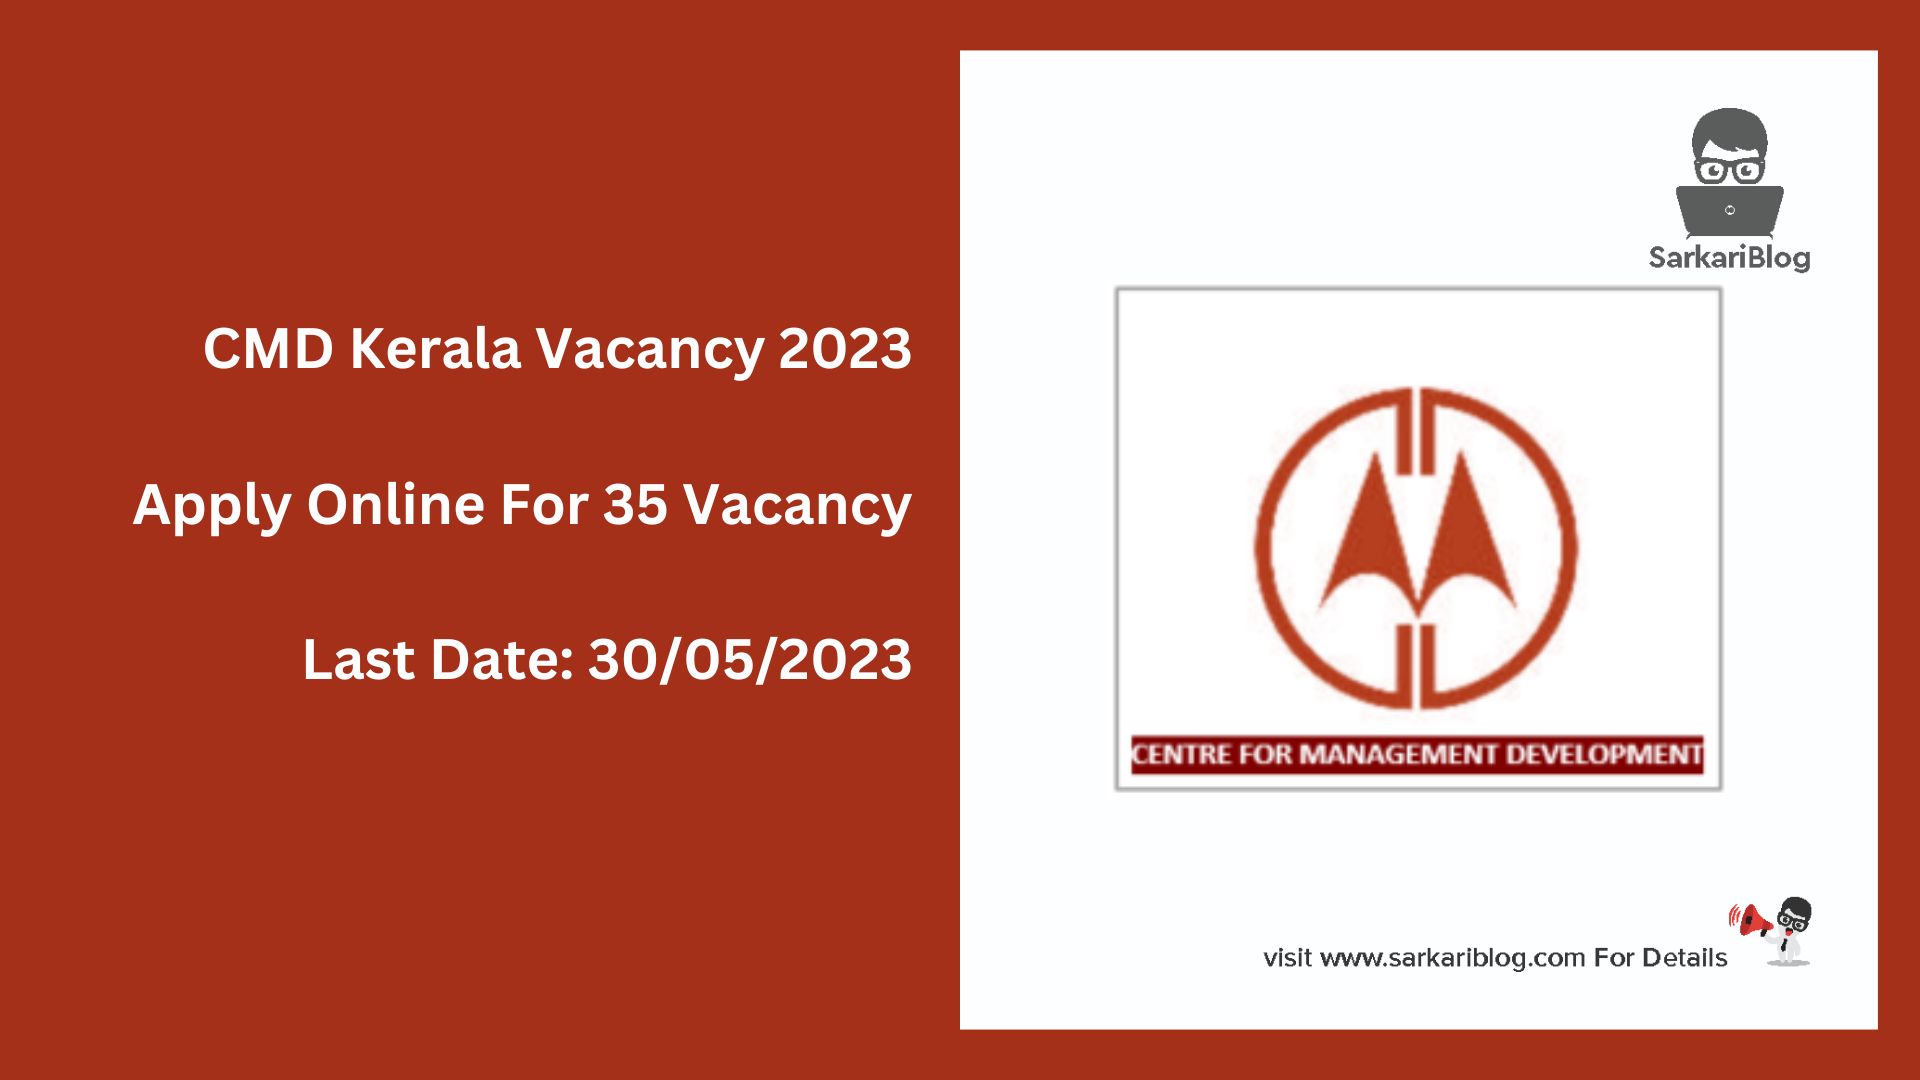 CMD Kerala Recruitment 2023